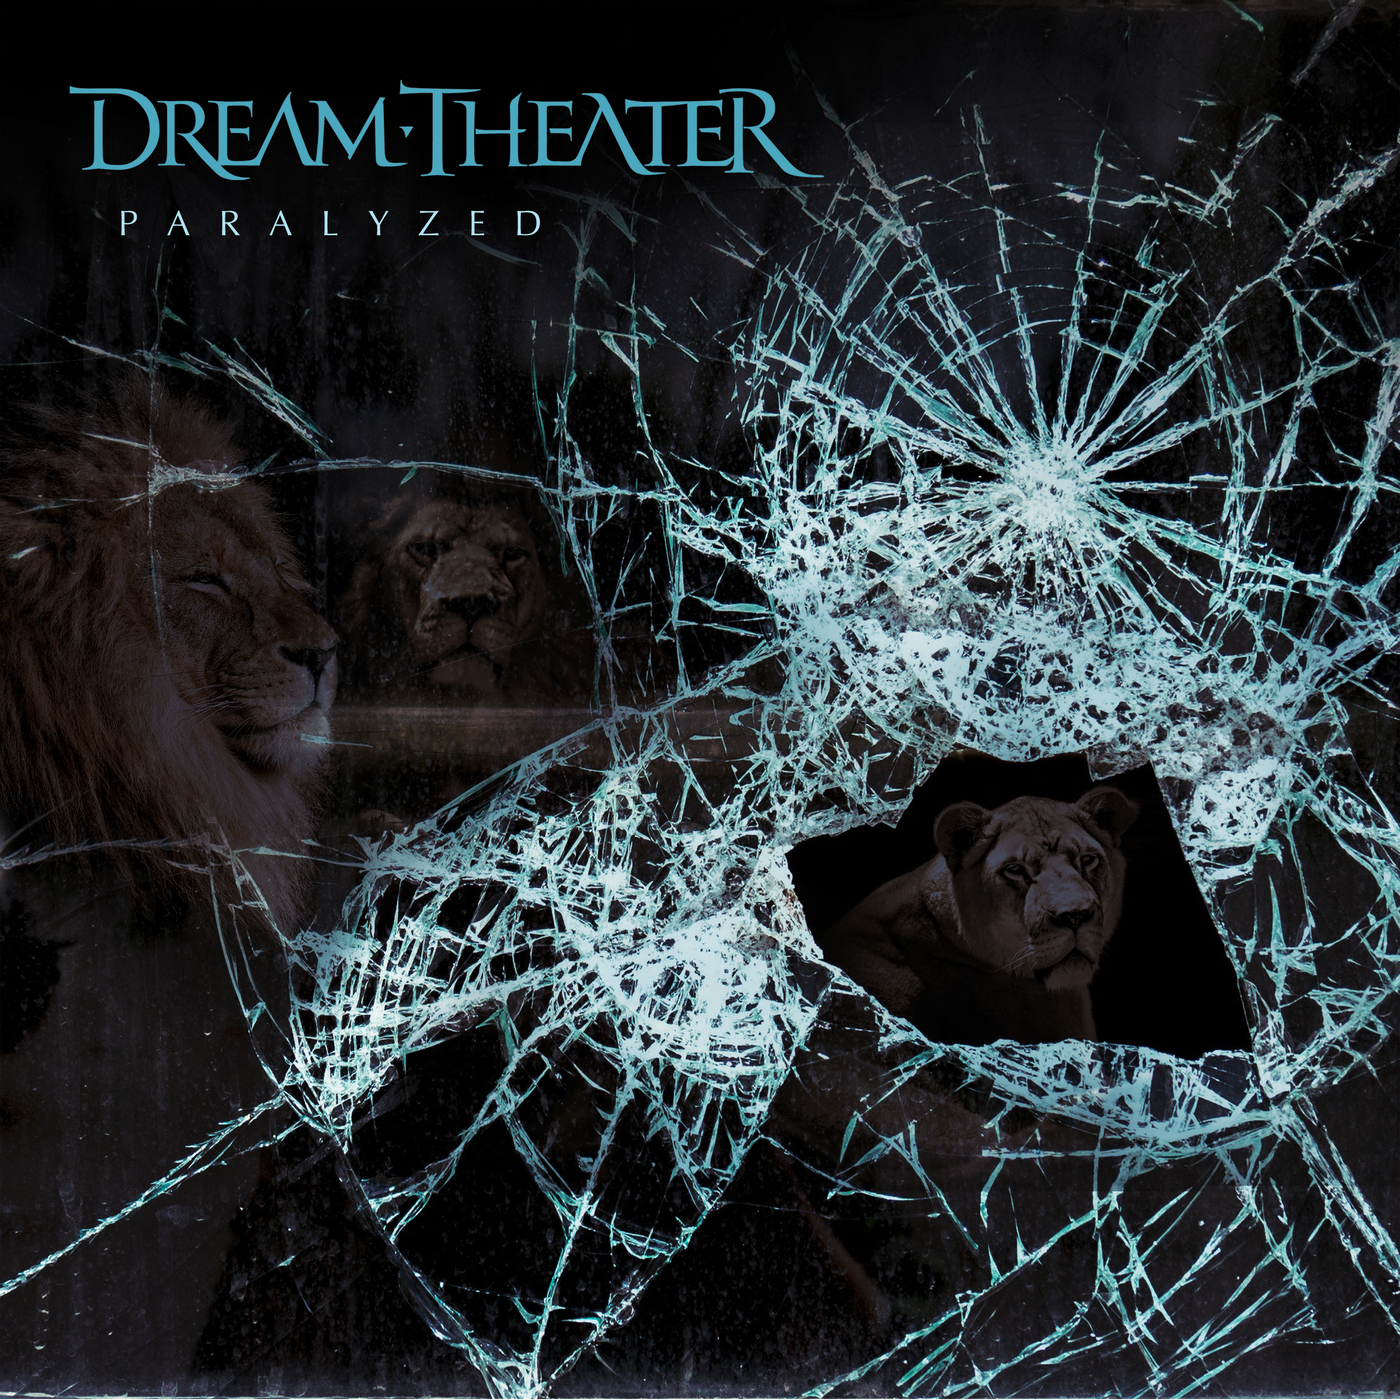 Theater песня. Dream Theater. Paralyzed. Dream Theater distance over time 2019. Dream Theater albums.